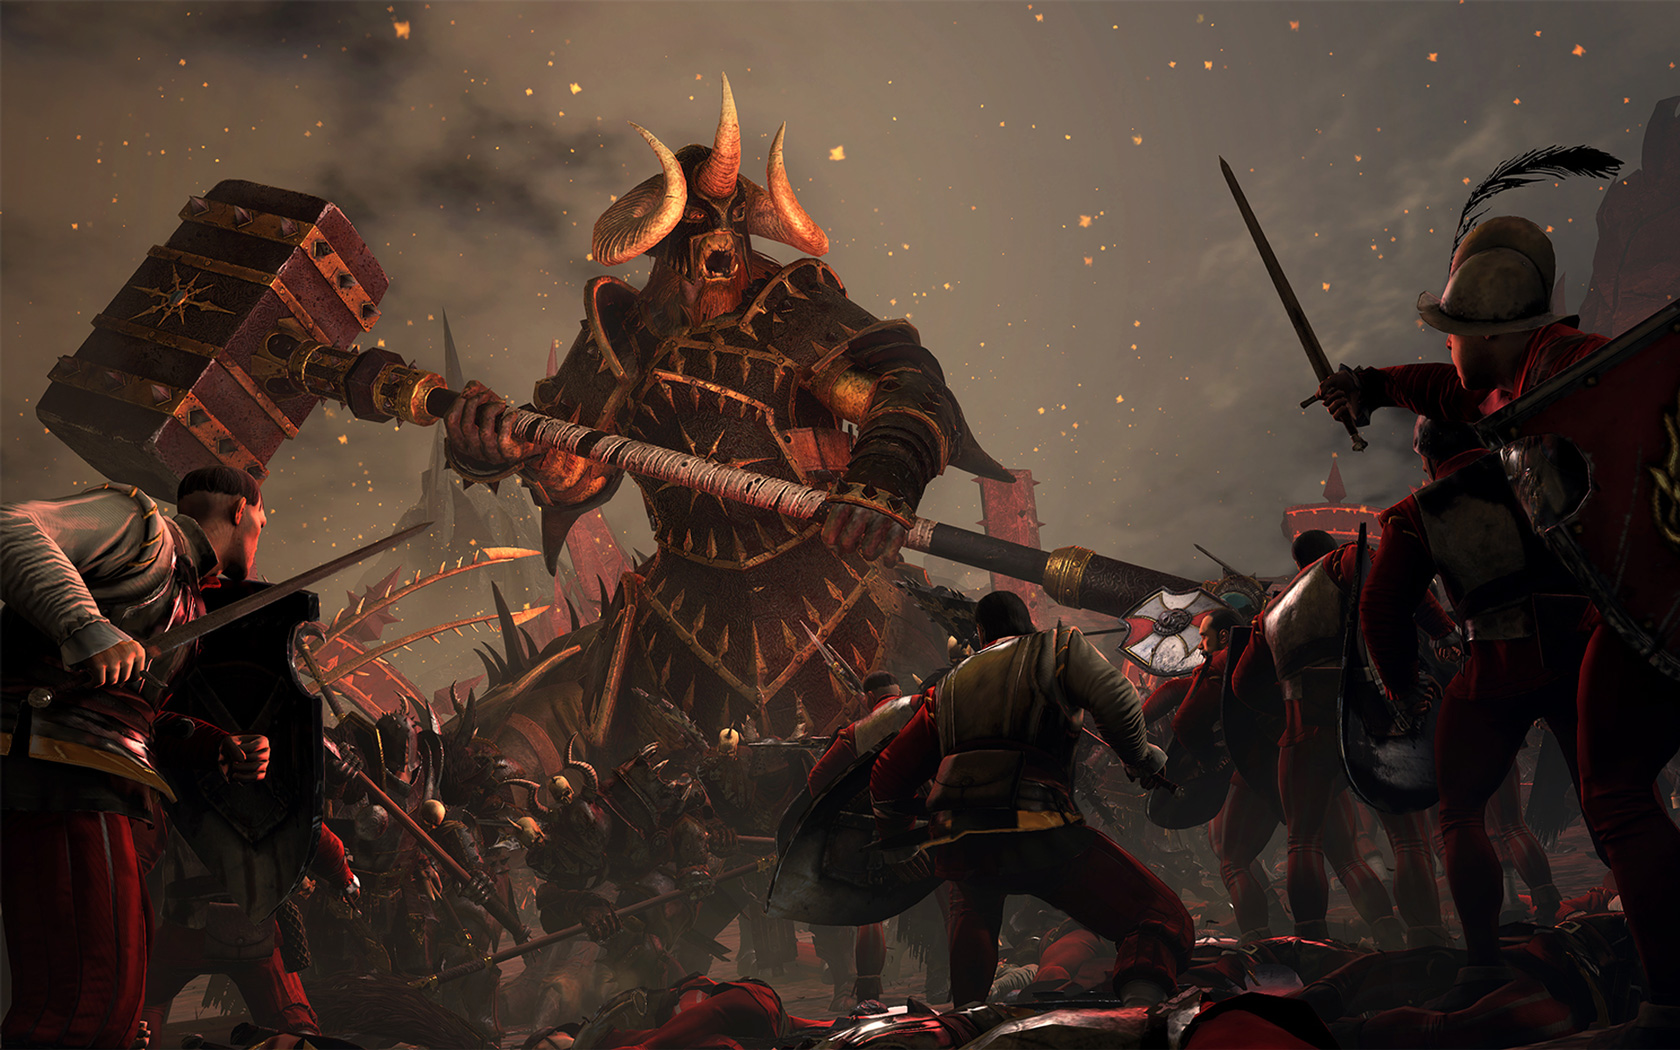 Total War Warhammer Images Wallpapers